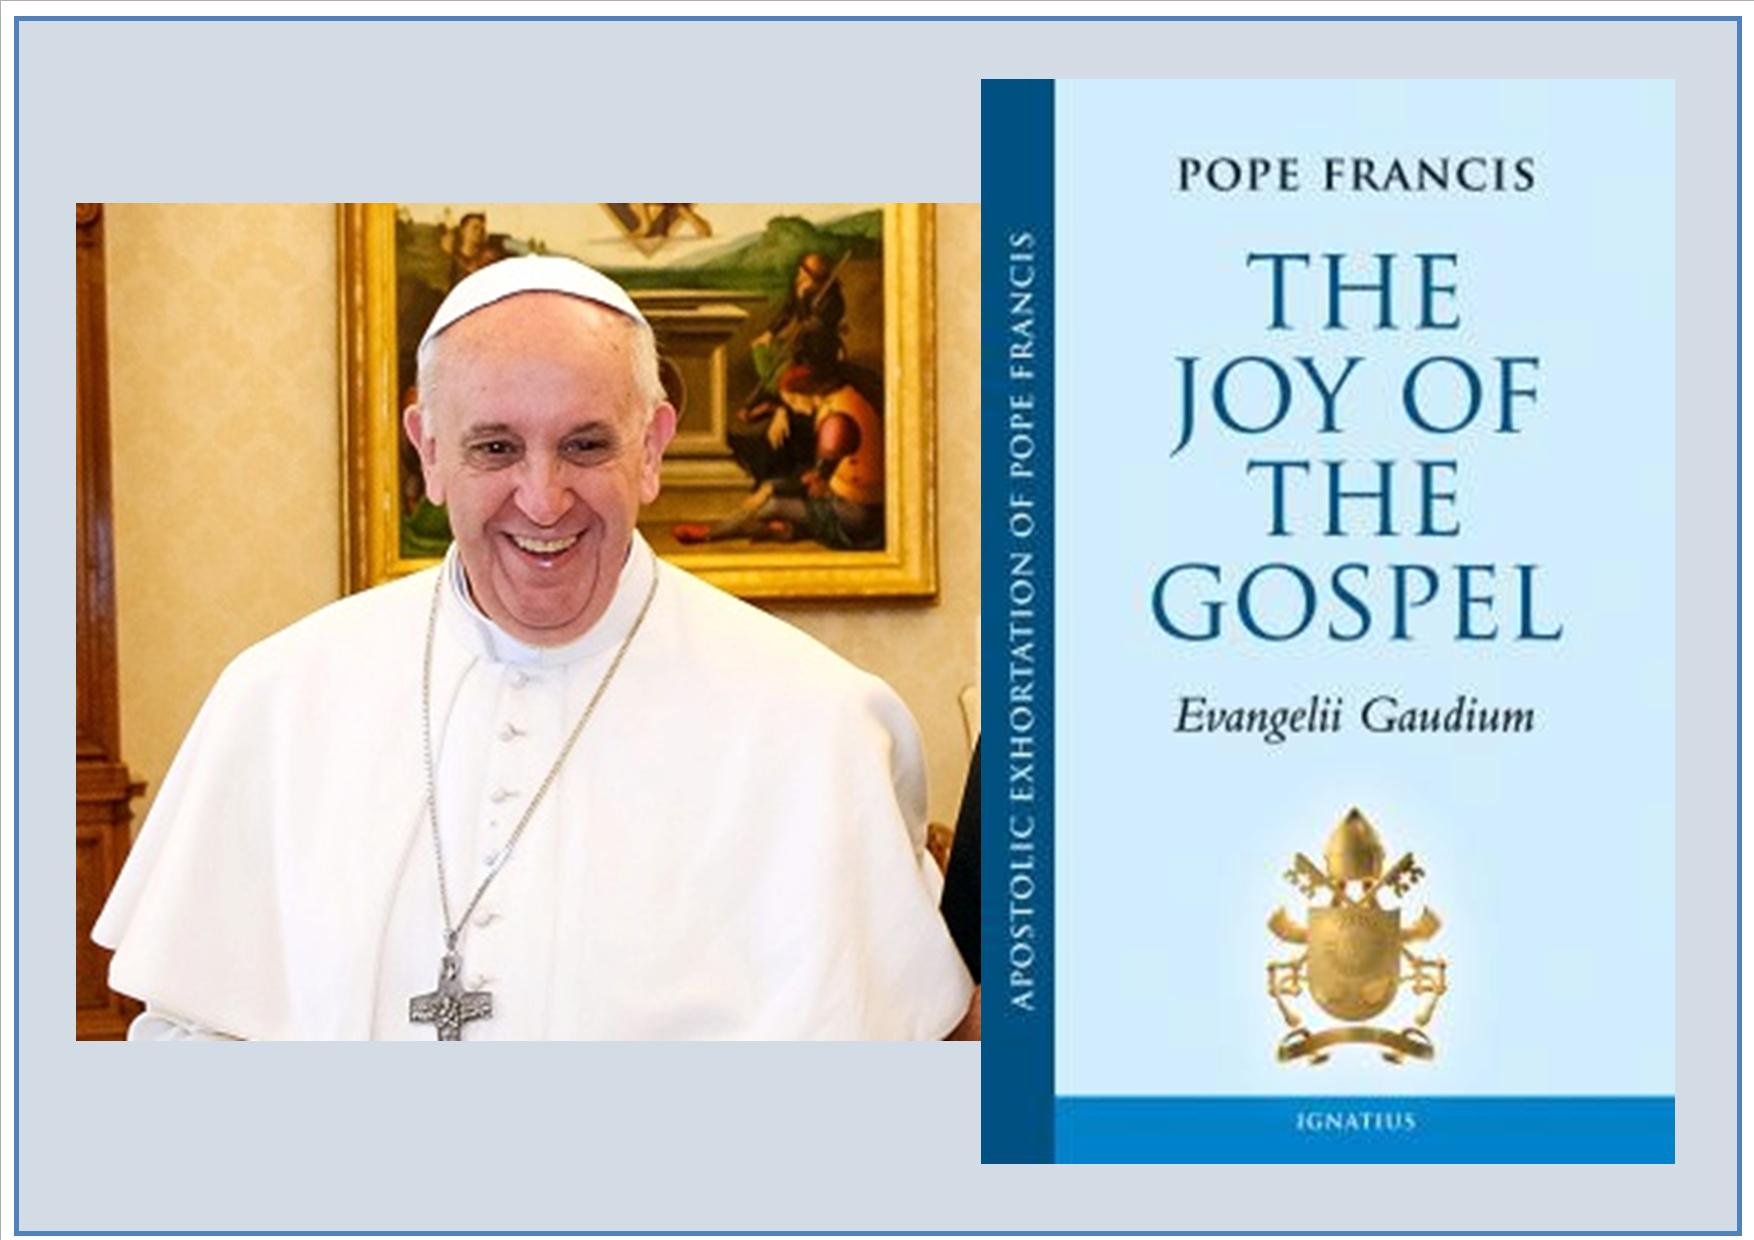 Evangelii Gaudium: The Joy of the Gospel by Pope Francis